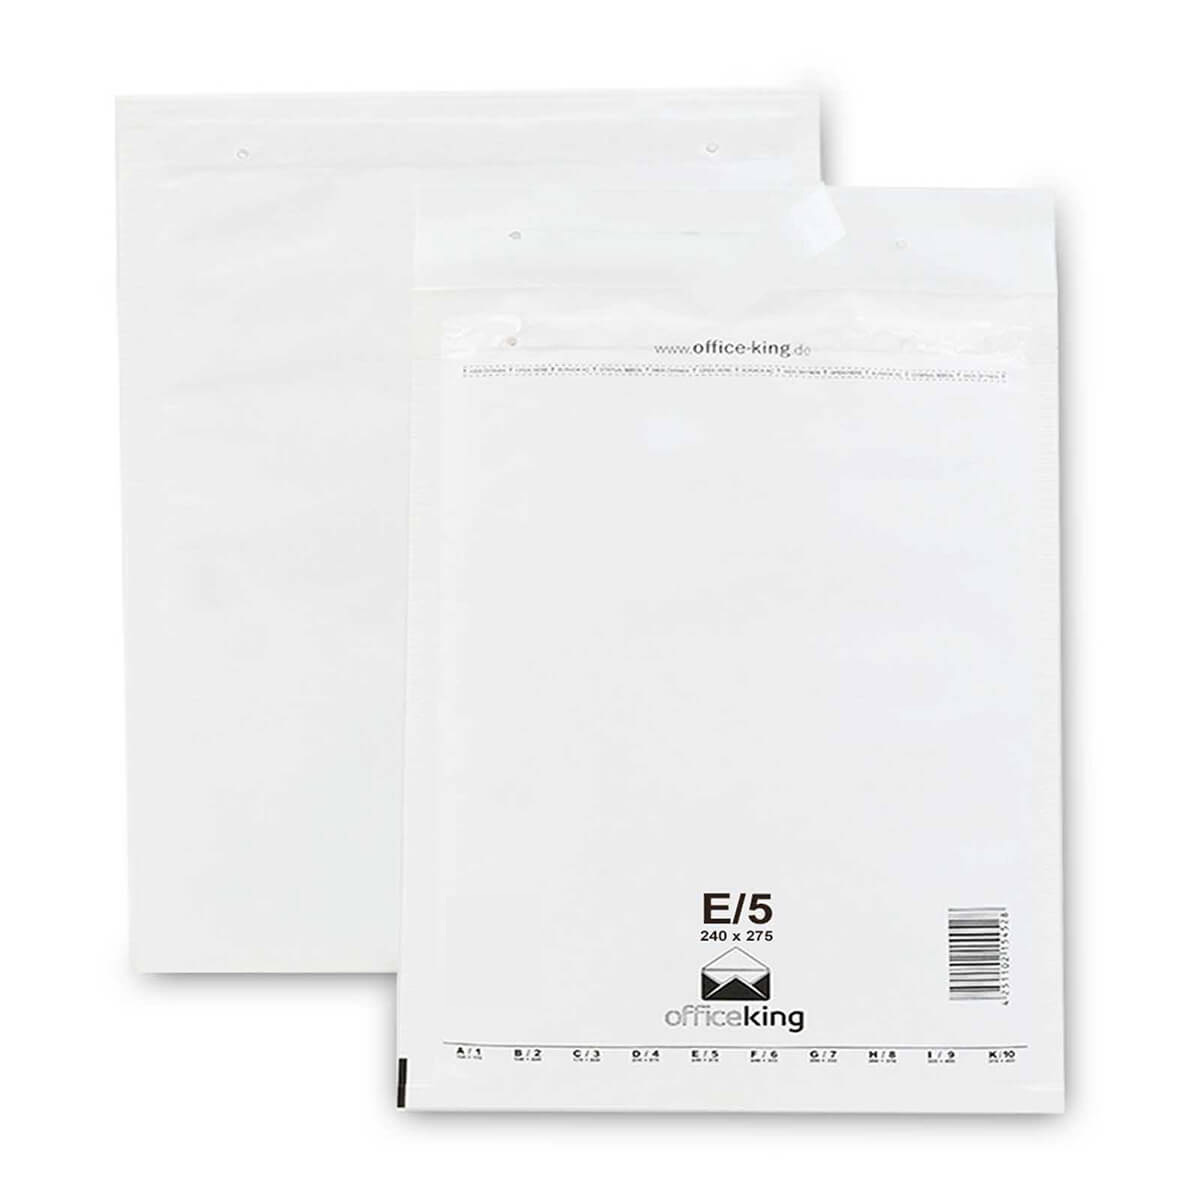 100x E5 Luftpolstertaschen 240x275 mm weiß - officeking